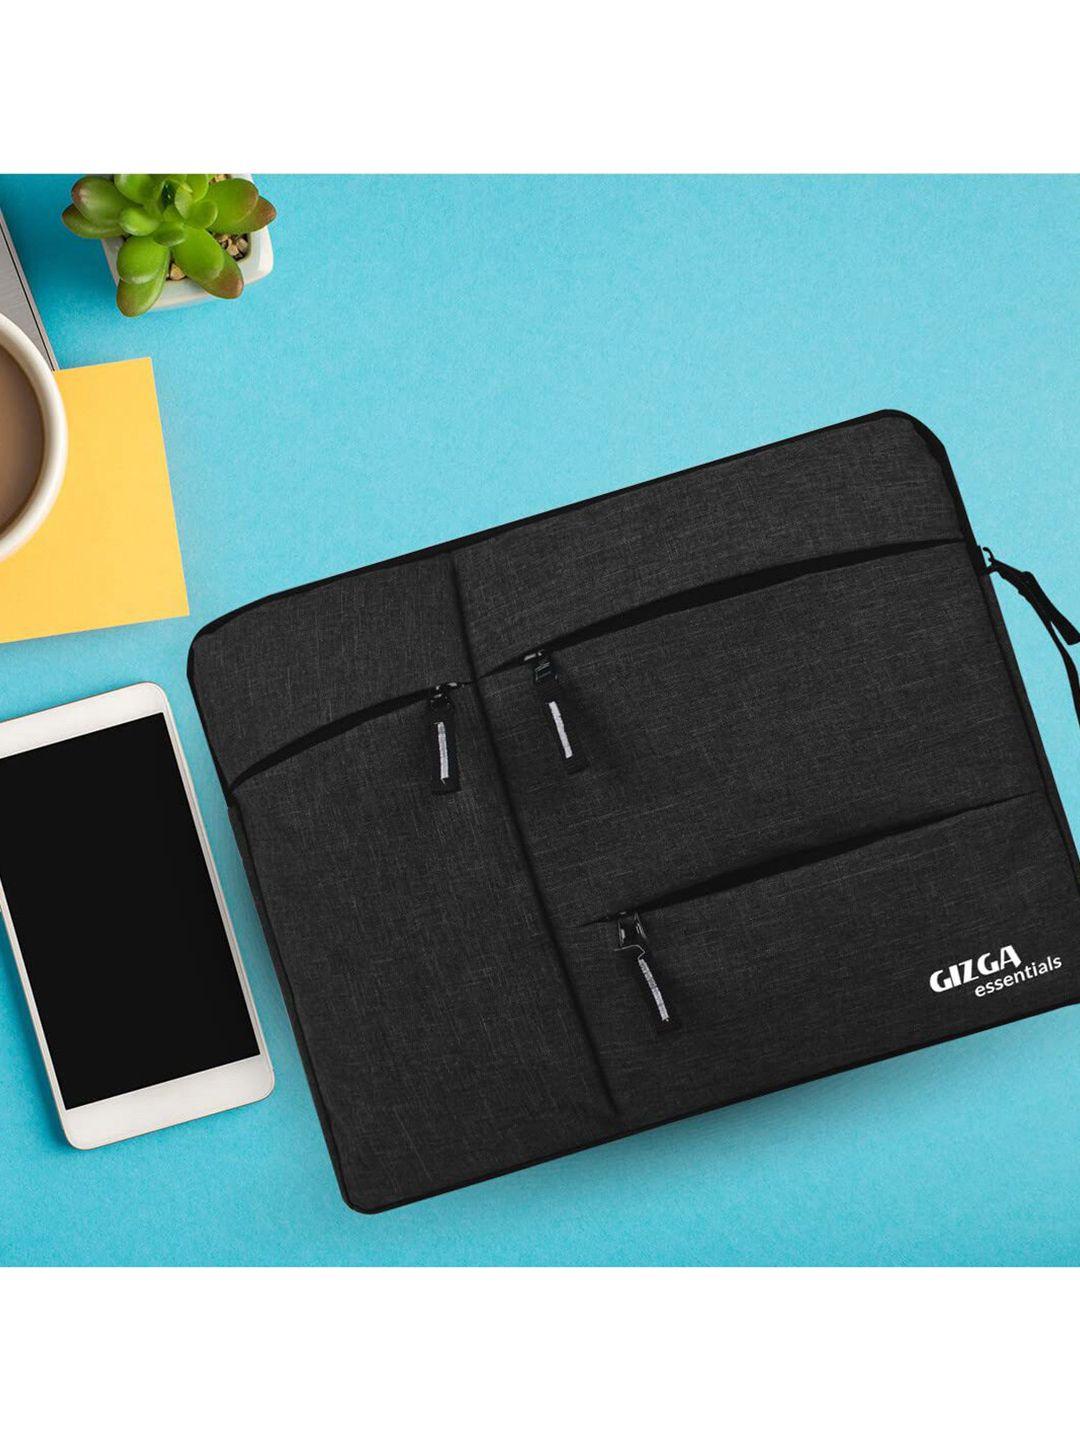 gizga essentials black water resistant laptop sleeve